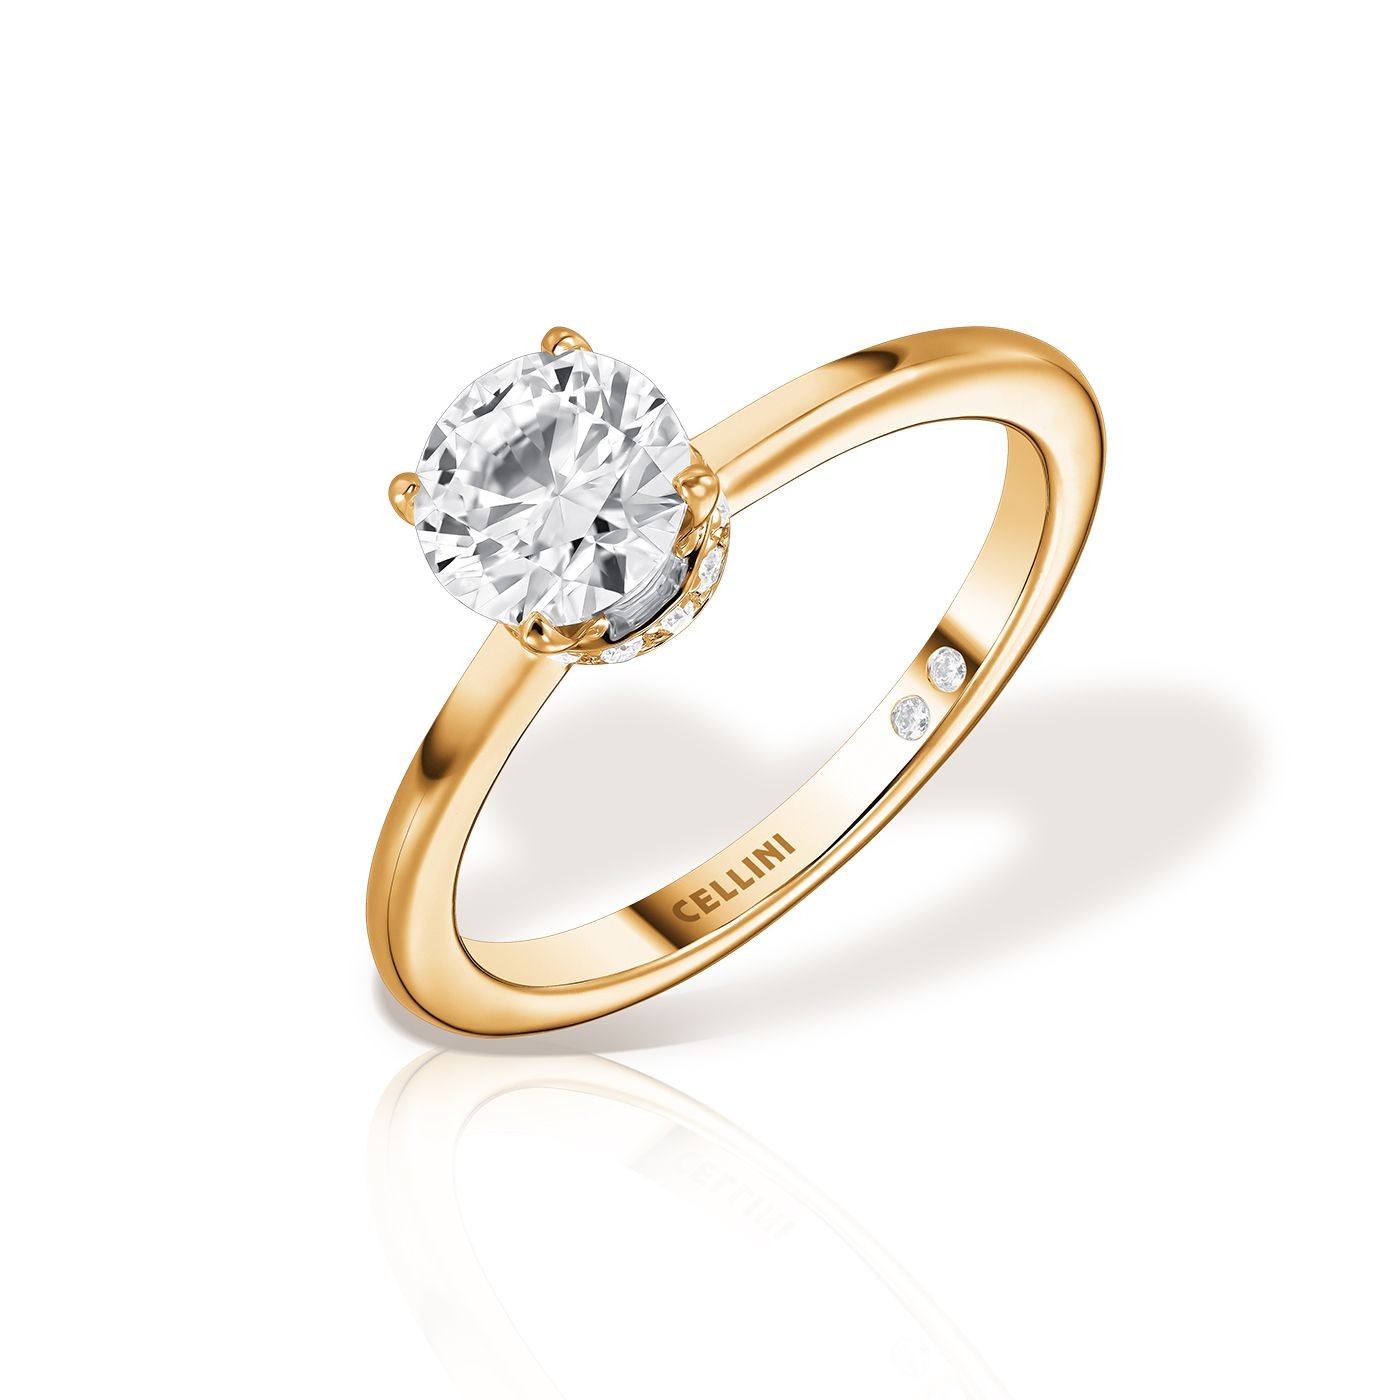 Inel de logodna INFINITY cu diamante de 0.23 carate, aur galben de 18K